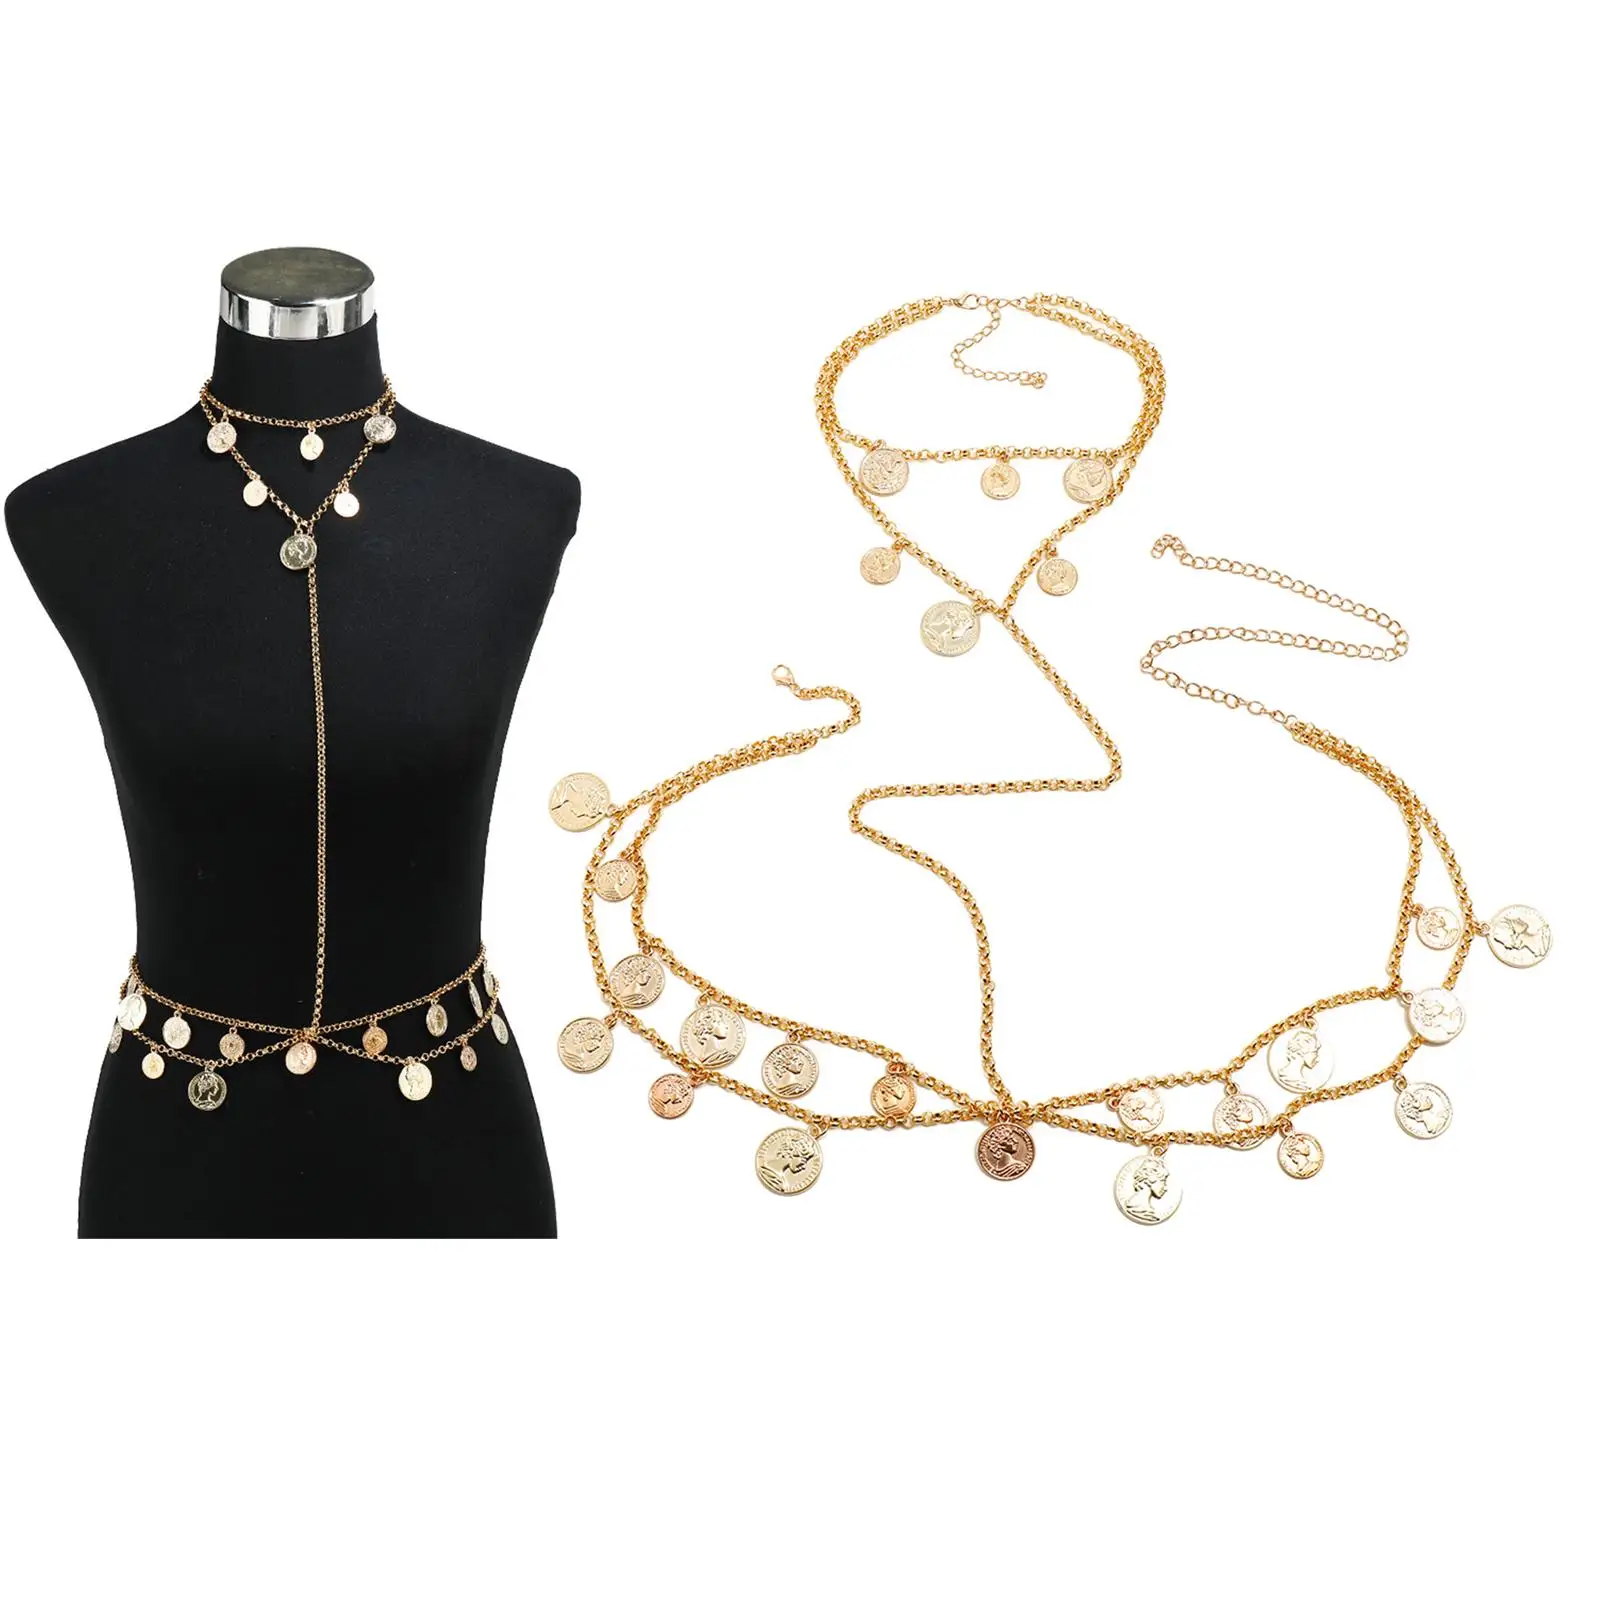 Body Chain Fashion Jewelry Alloy Multi-Level Gold Golden Coin Pendant Waist Chain Necklace for Gift Beach Nightclub Girls Women